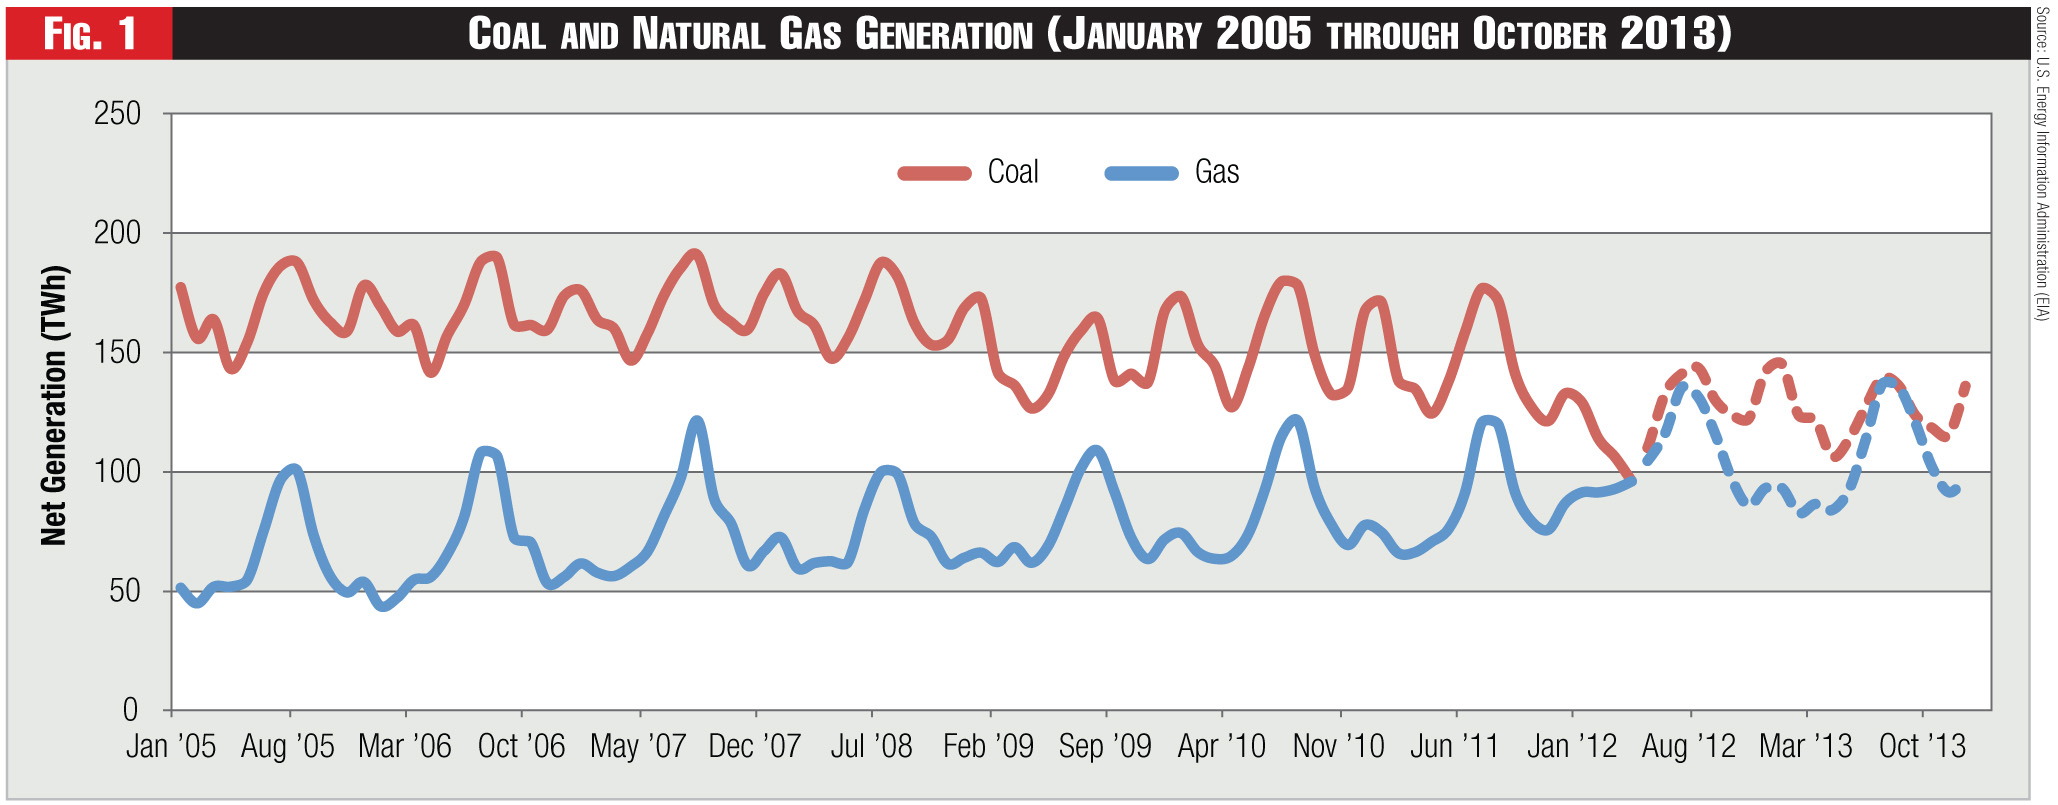 Figure 1 - Coal and Natural Gas Generation (January 2005 through October 2013)